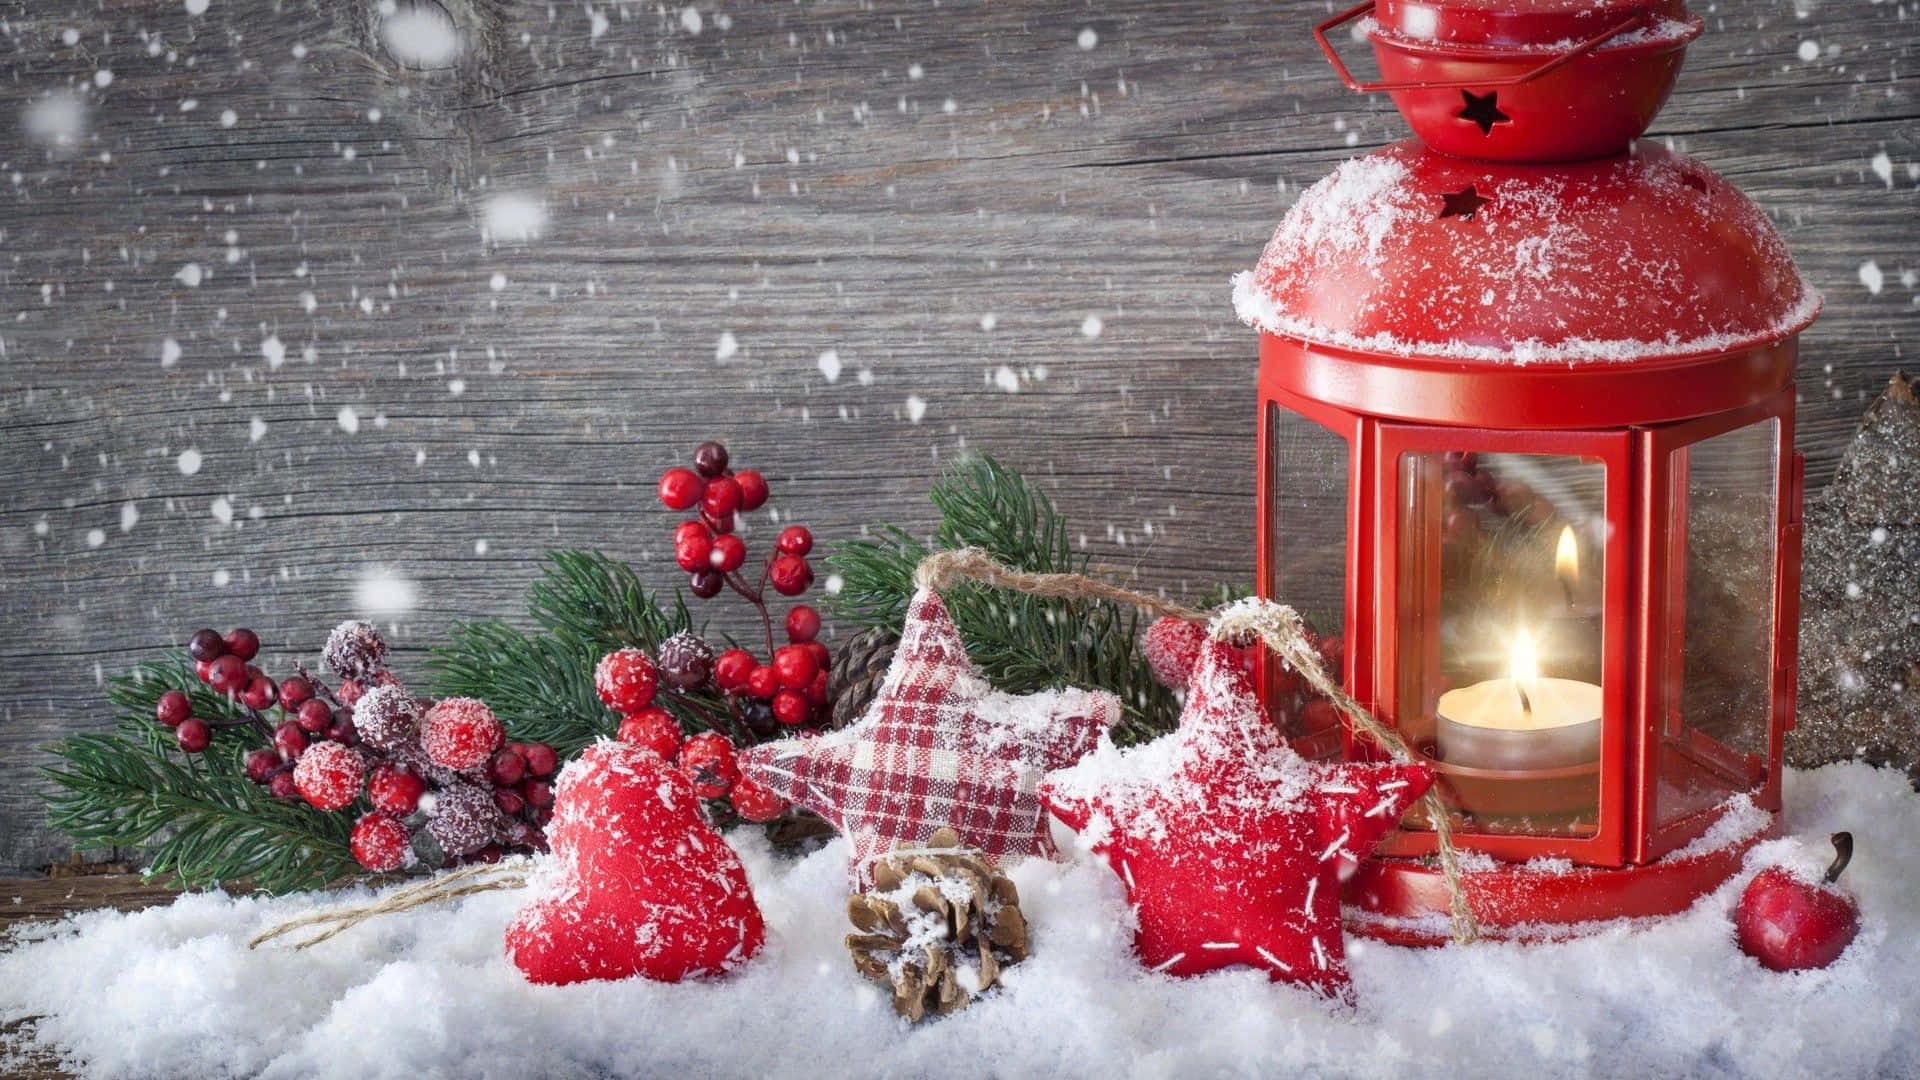 A winter wonderland awaits during the Christmas season Wallpaper